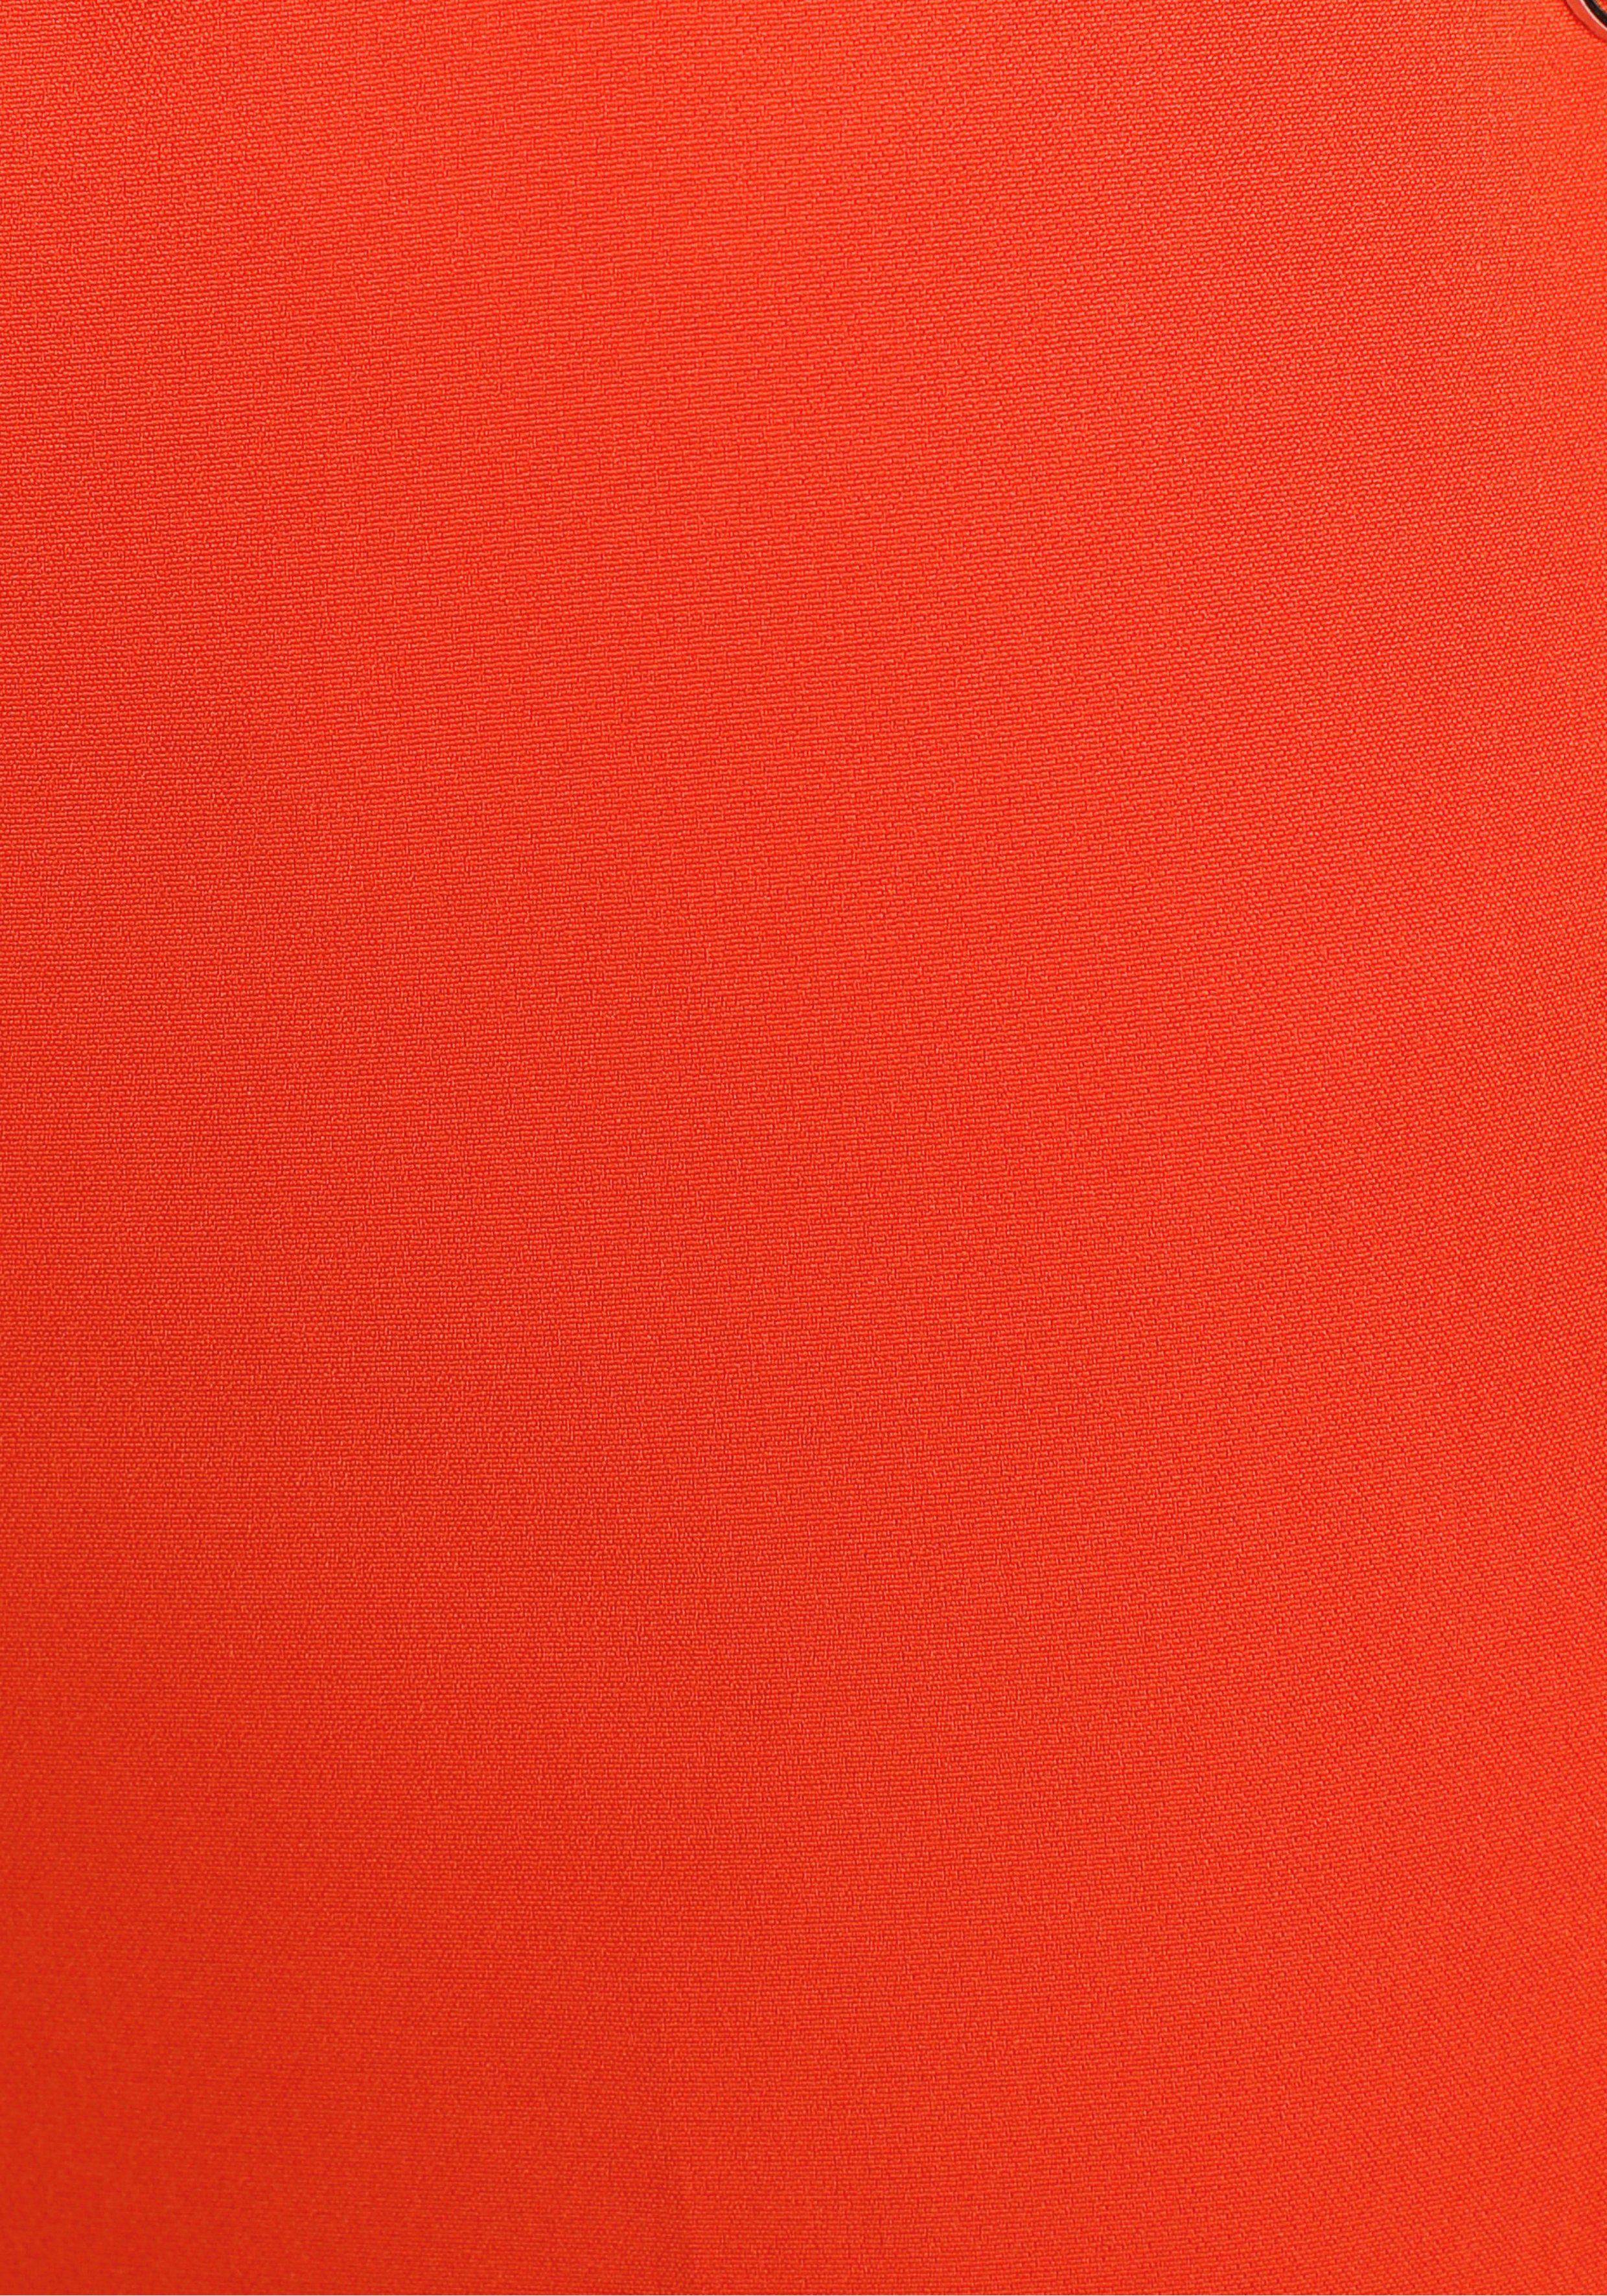 Tamaris Anzughose in Trendfarben orange nachhaltigem (Hose Material) aus